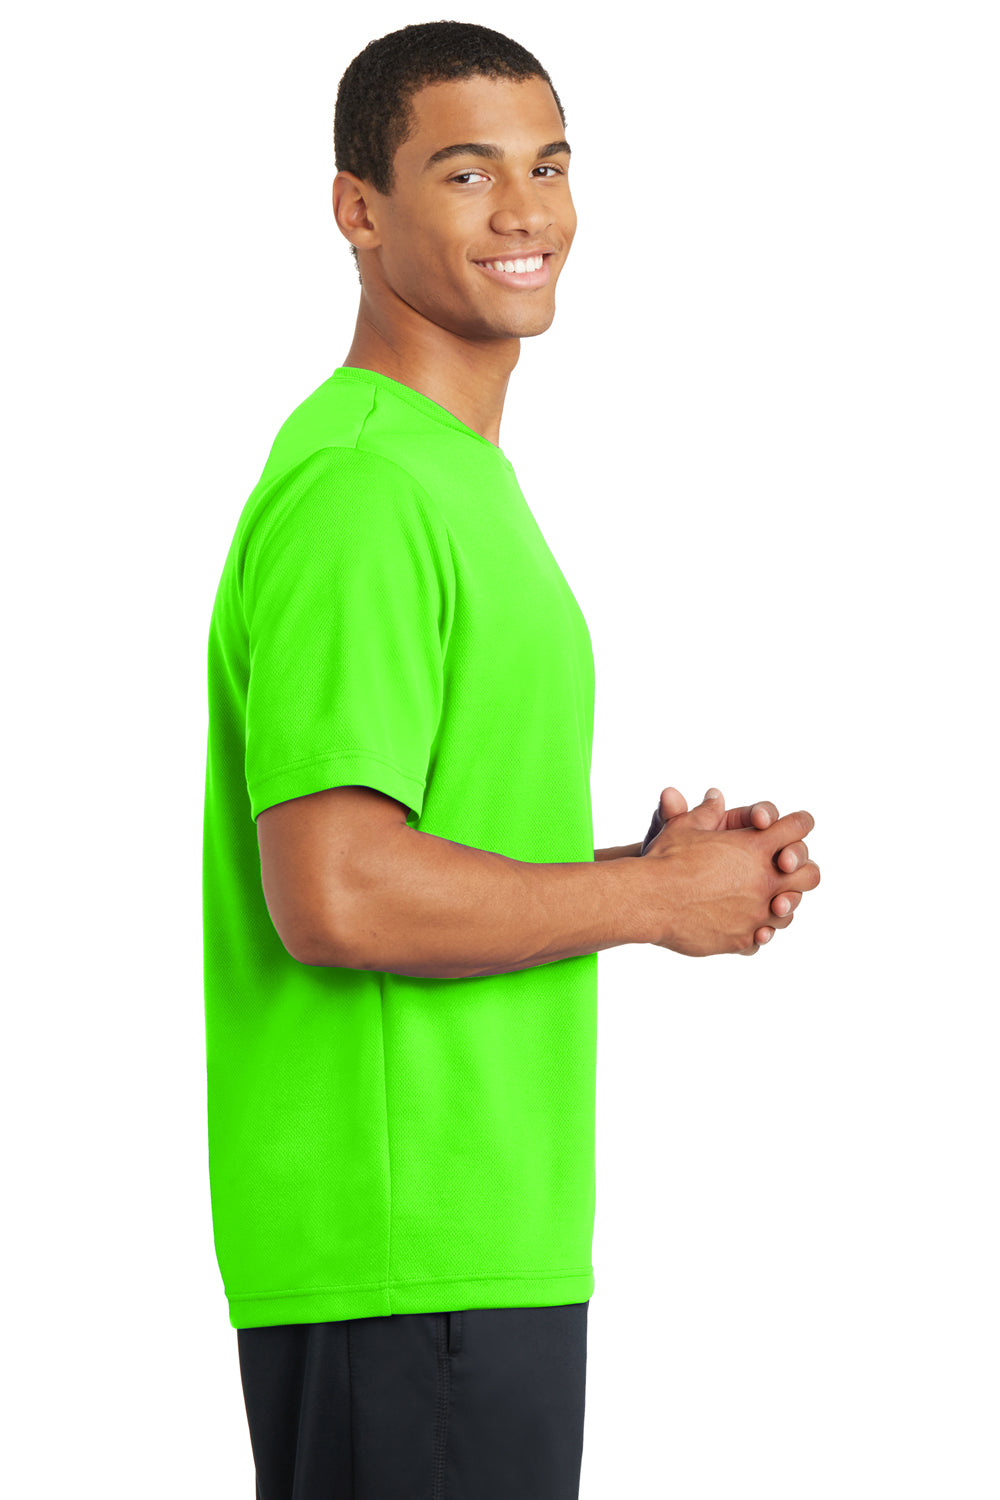 Tek Gear On the Go Gear Women's 3X Lime Green ss Athletic Tee Shirt